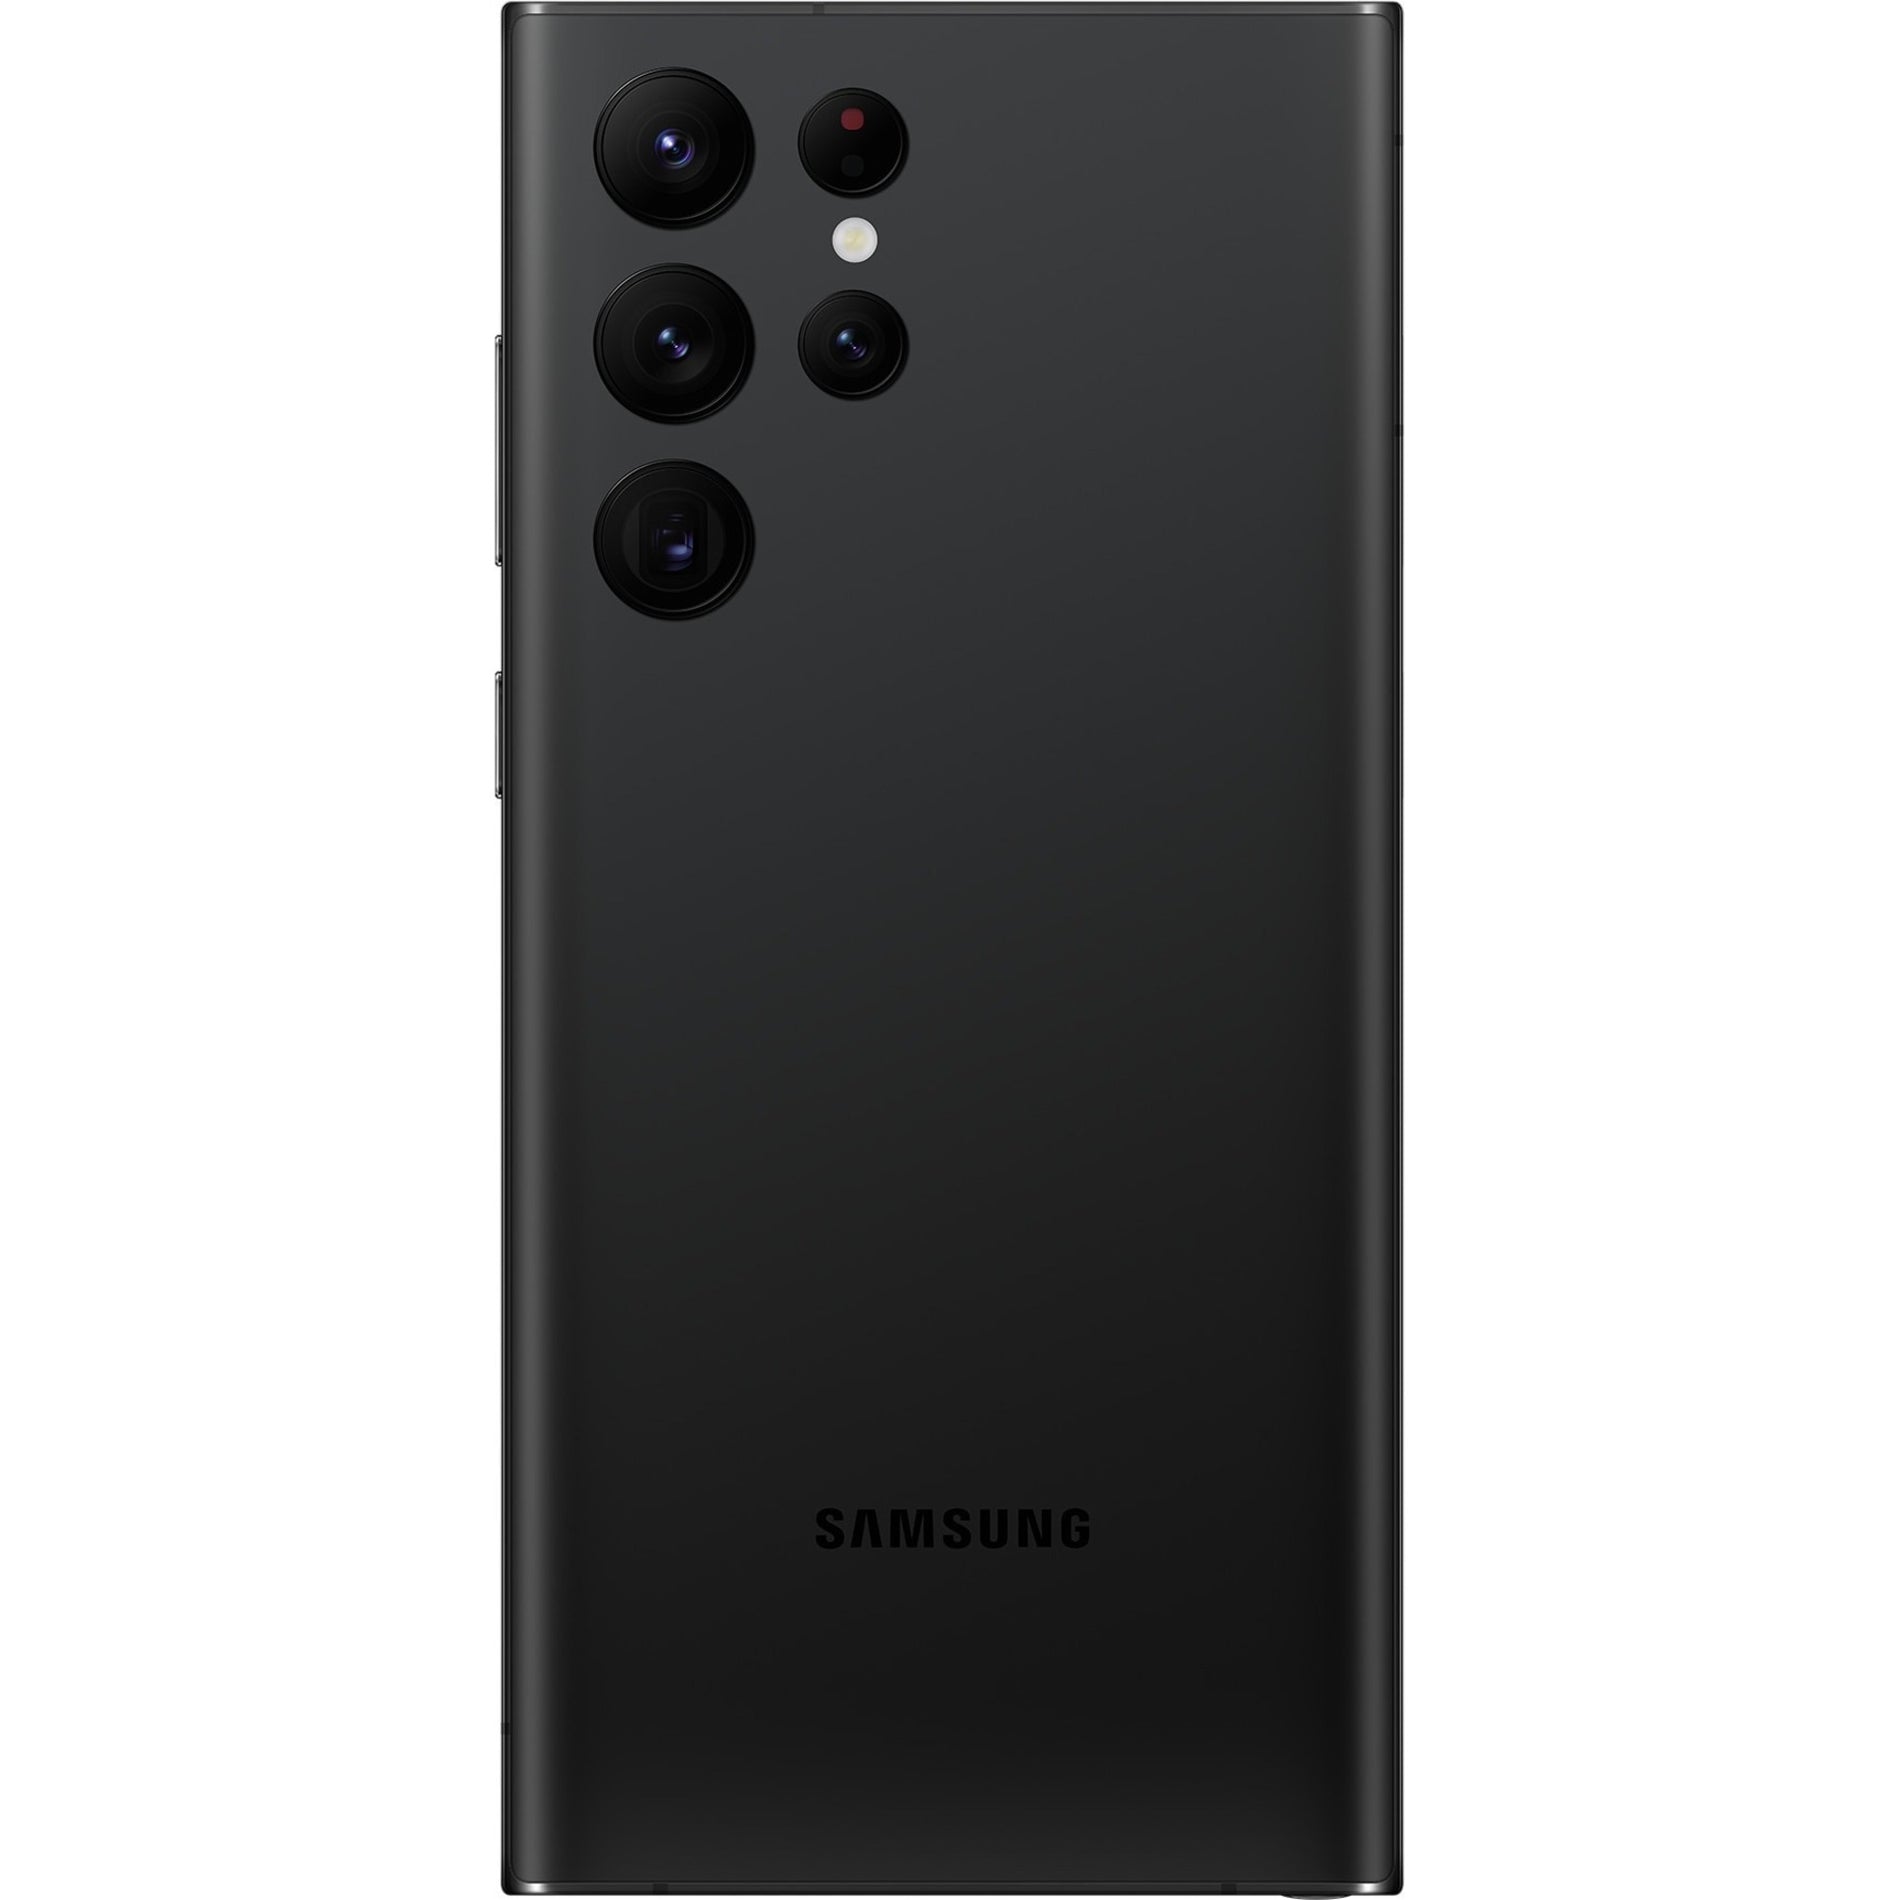 Samsung Galaxy S22 Ultra 128GB Unlocked Smartphone - Phantom Black [Discontinued]